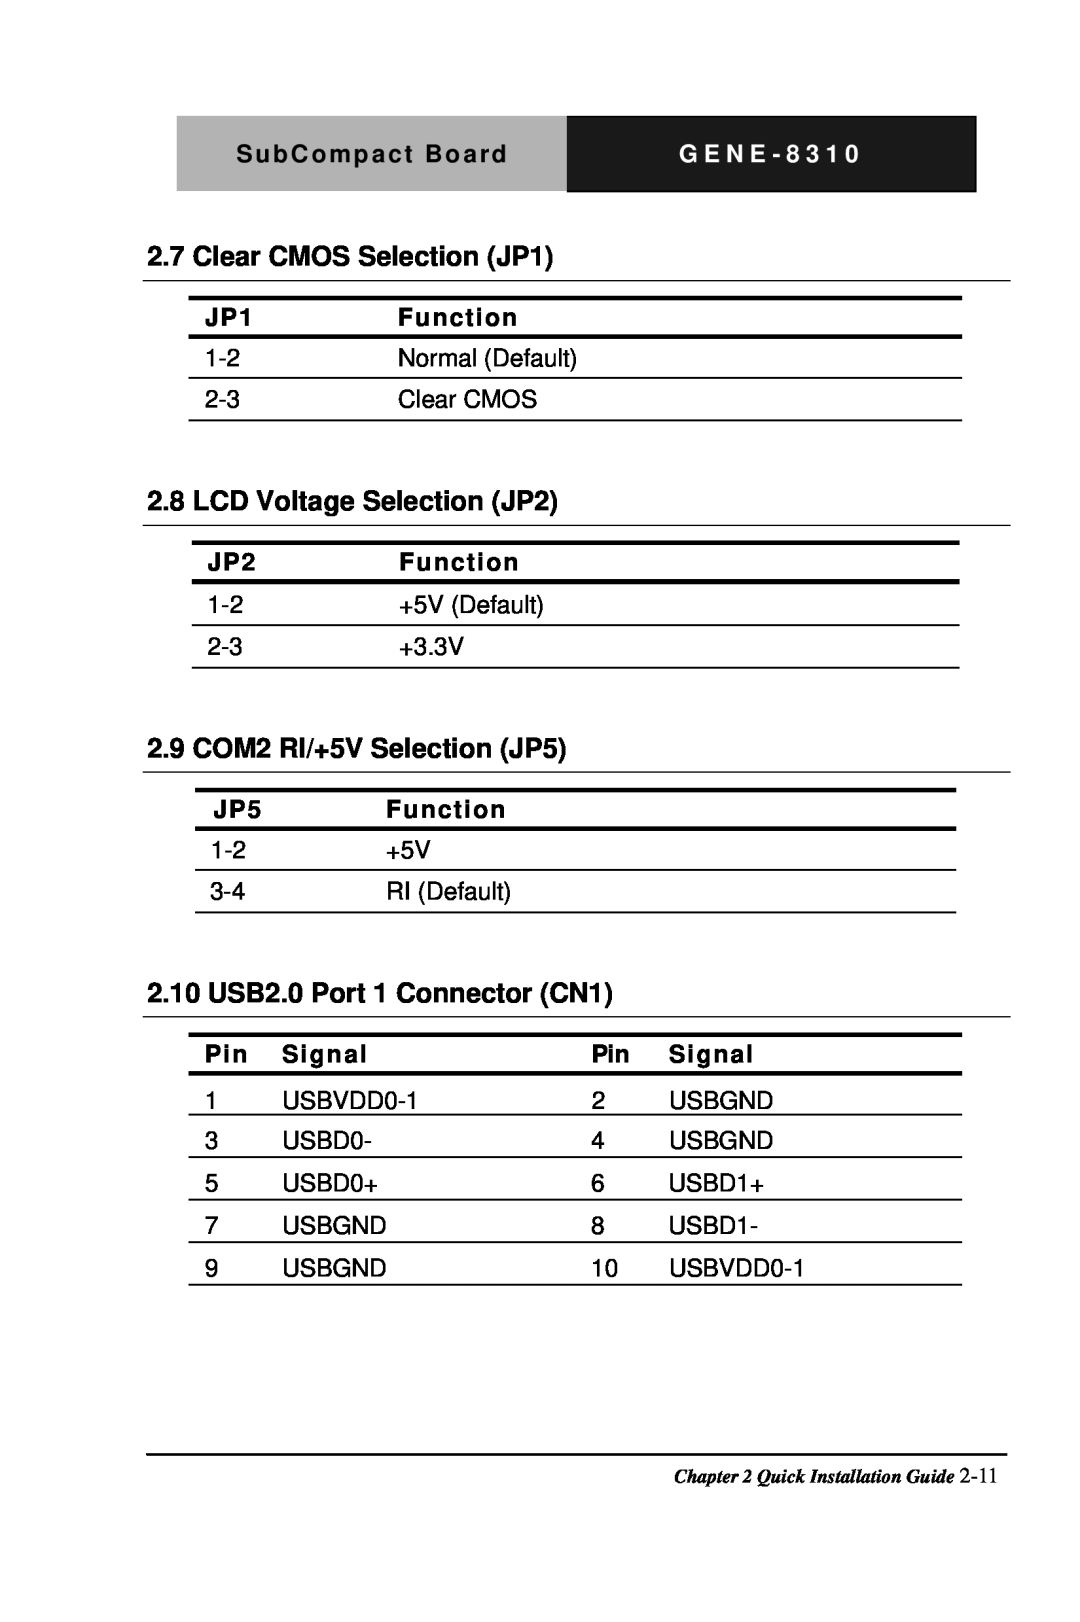 Intel GENE-8310 manual Clear CMOS Selection JP1, LCD Voltage Selection JP2, 2.9 COM2 RI/+5V Selection JP5, SubCompact Board 